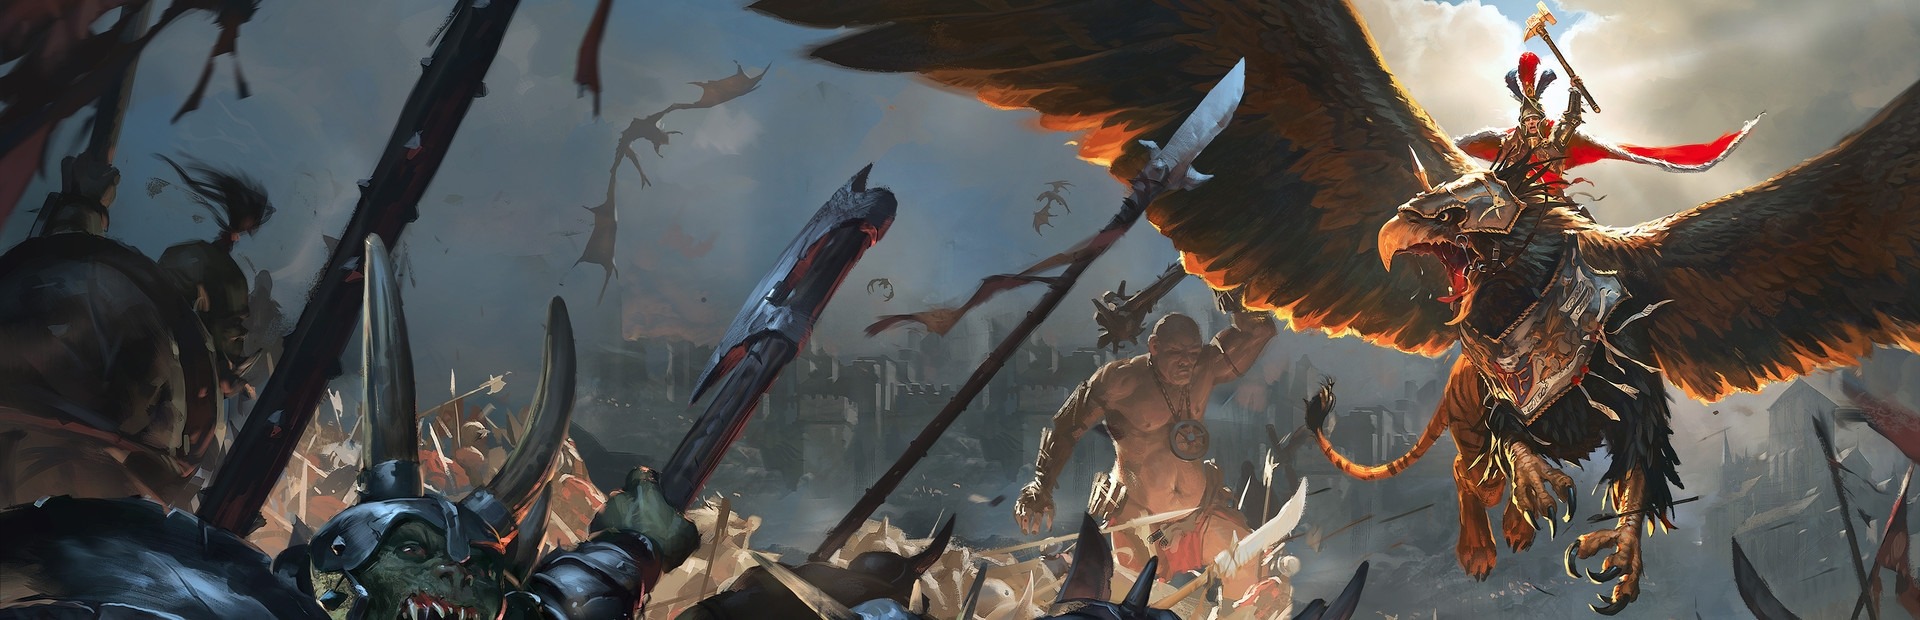 Banner Total War: Warhammer - Norsca